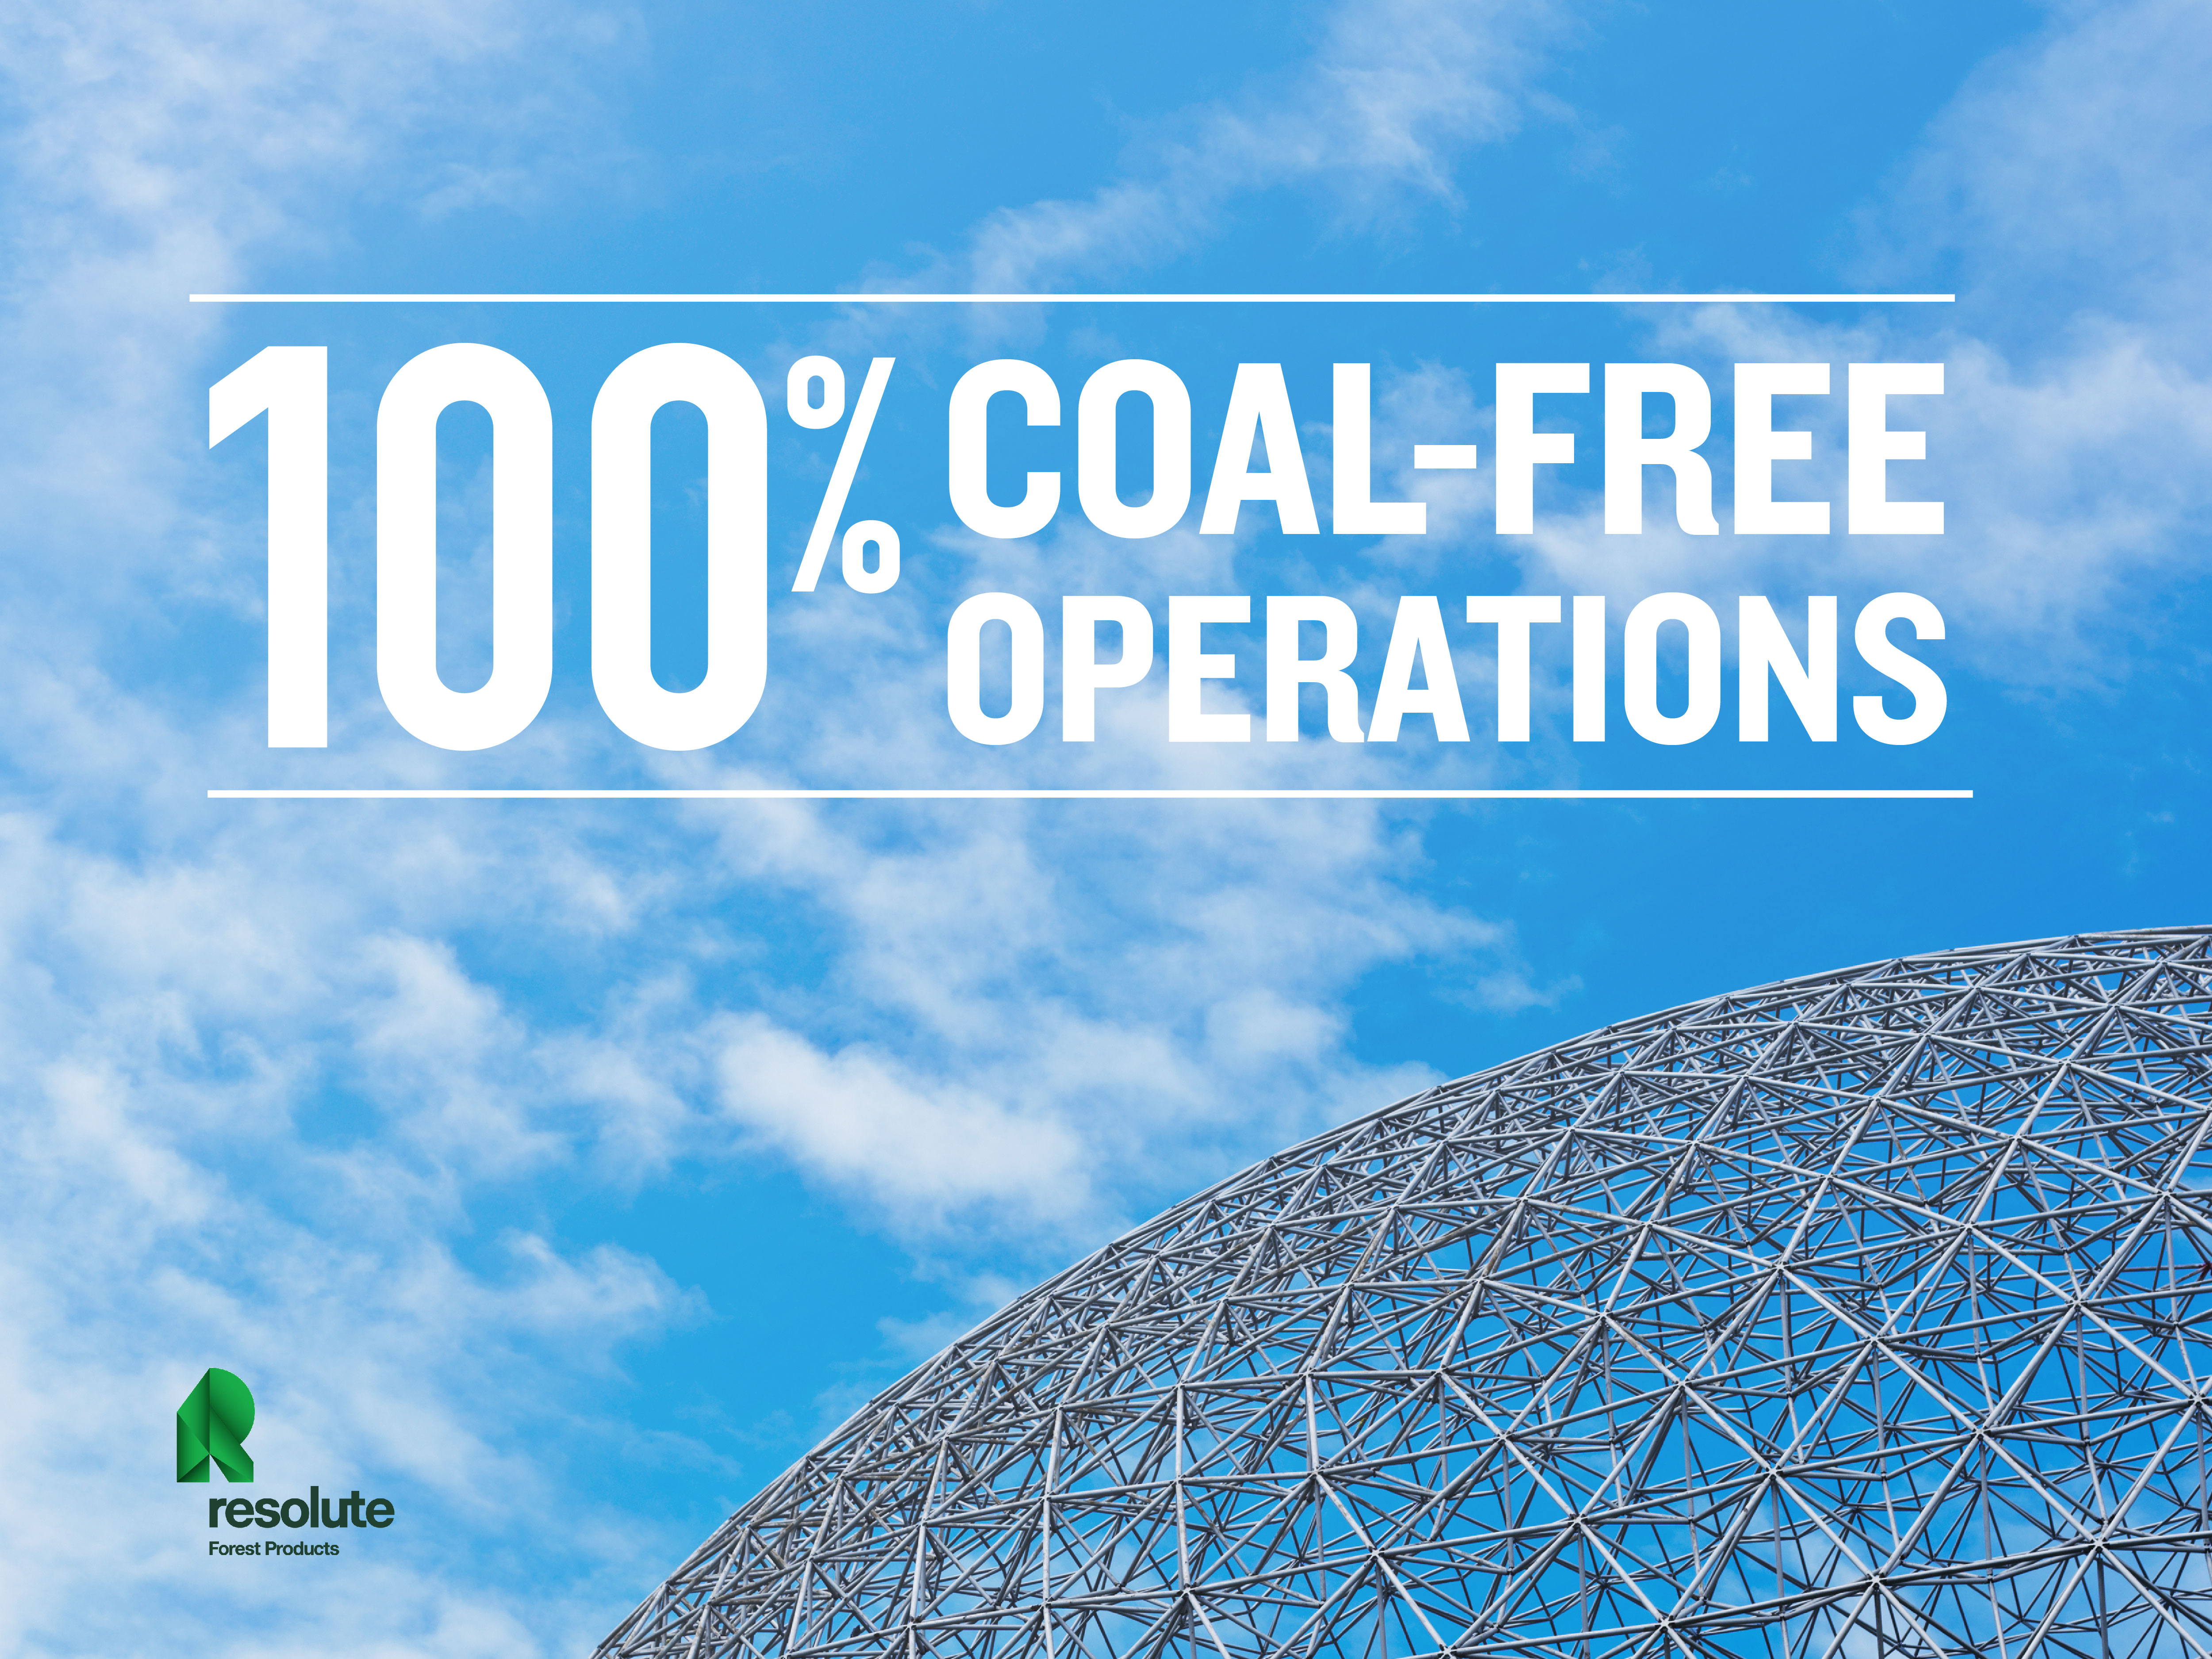 Resolute's coal-free operations